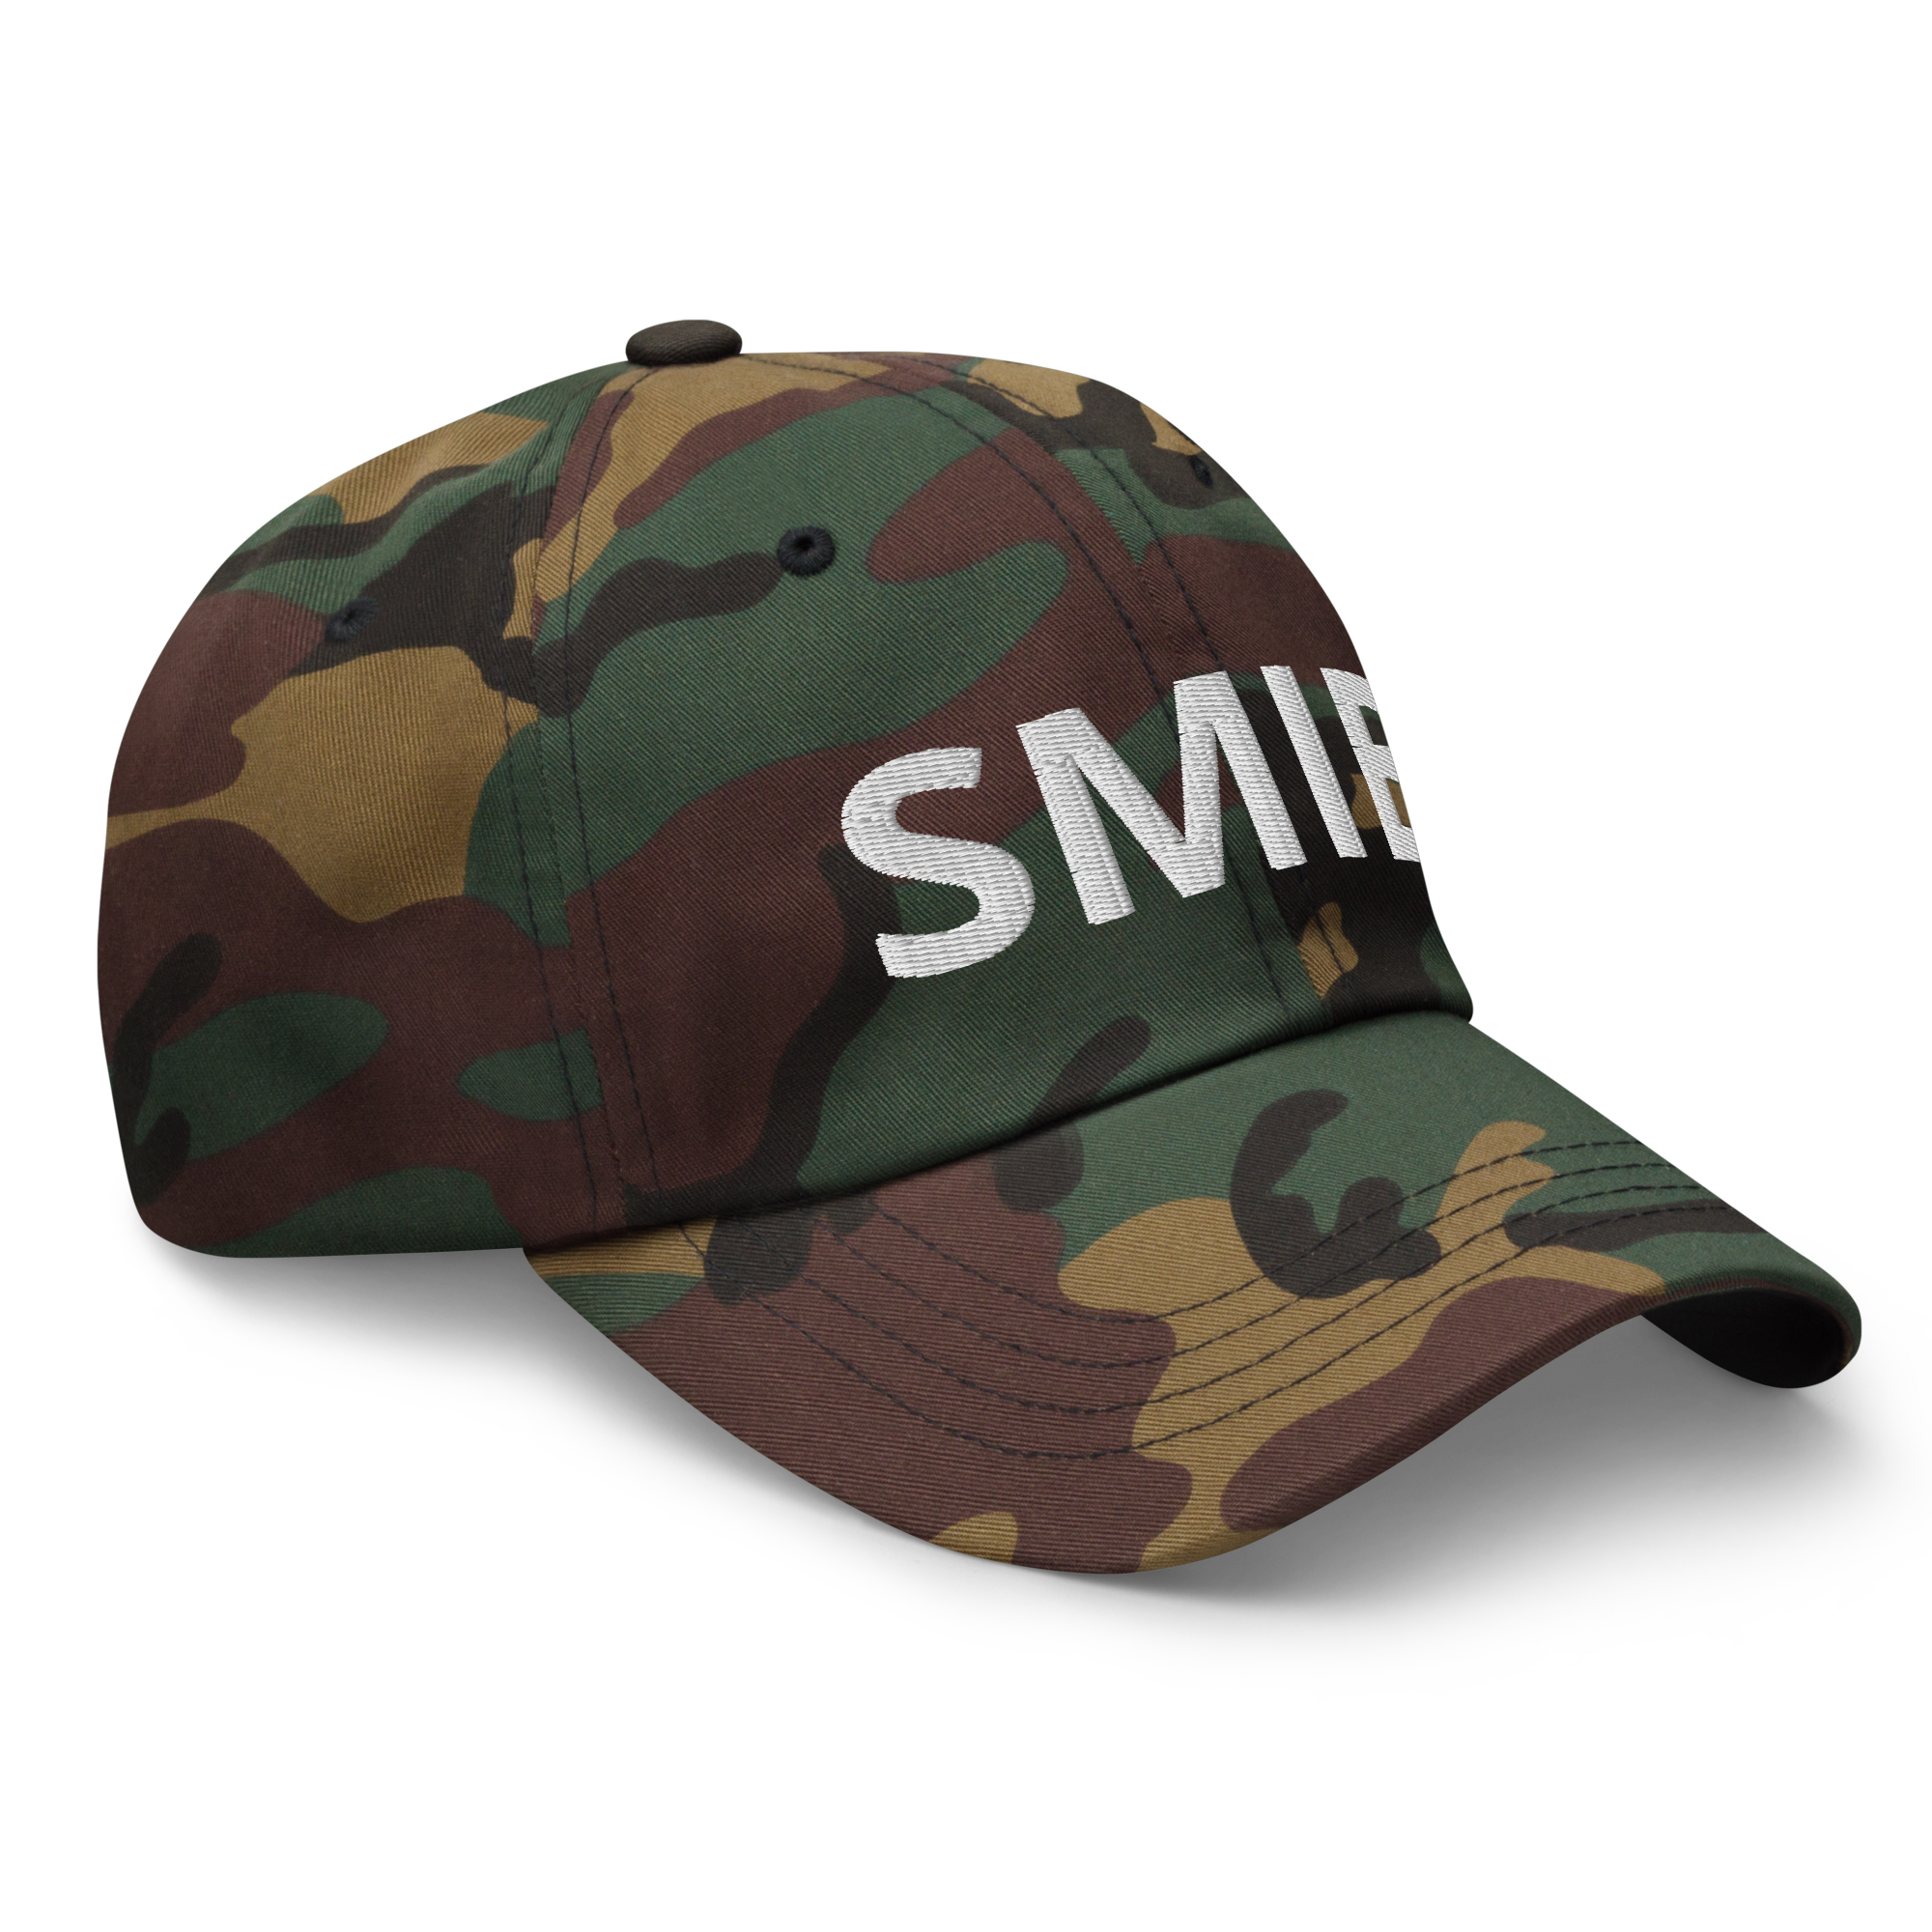 SMIB Classic Dad hat